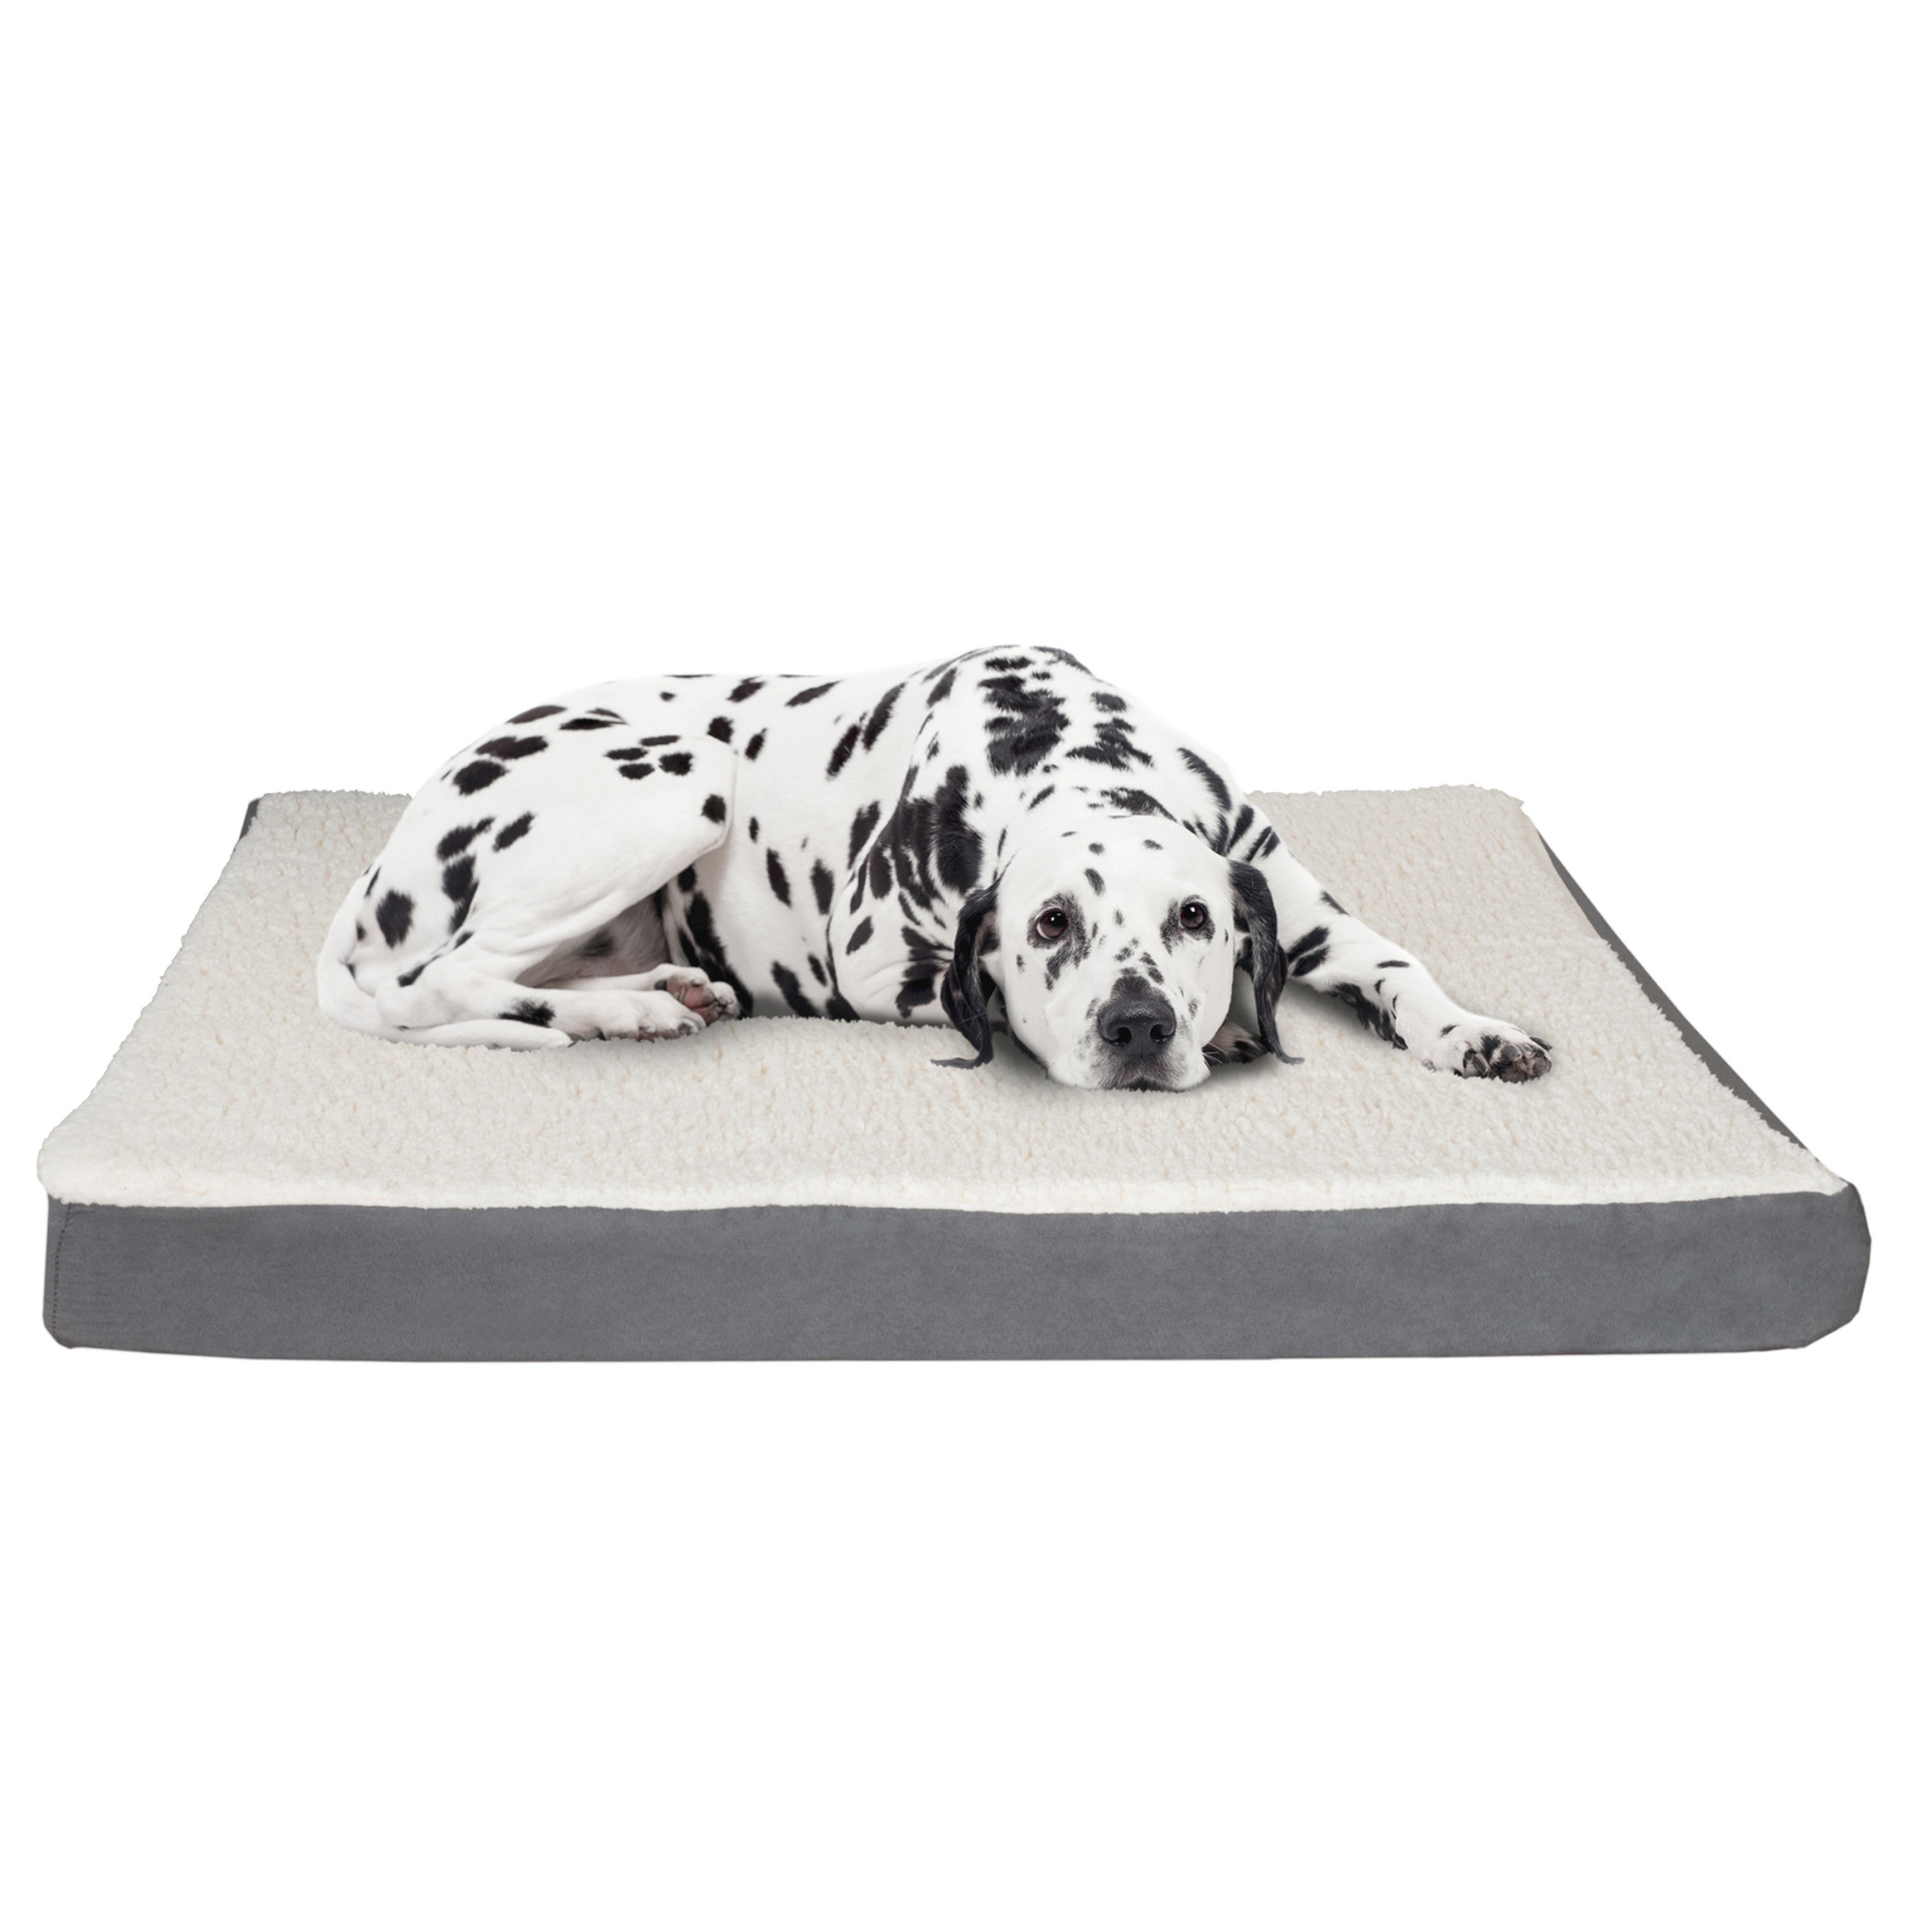 Orthopedic Dog Bed Memory Foam Cozy Sherpa 44 X 35 X 4 Washable Cover XL - Tan